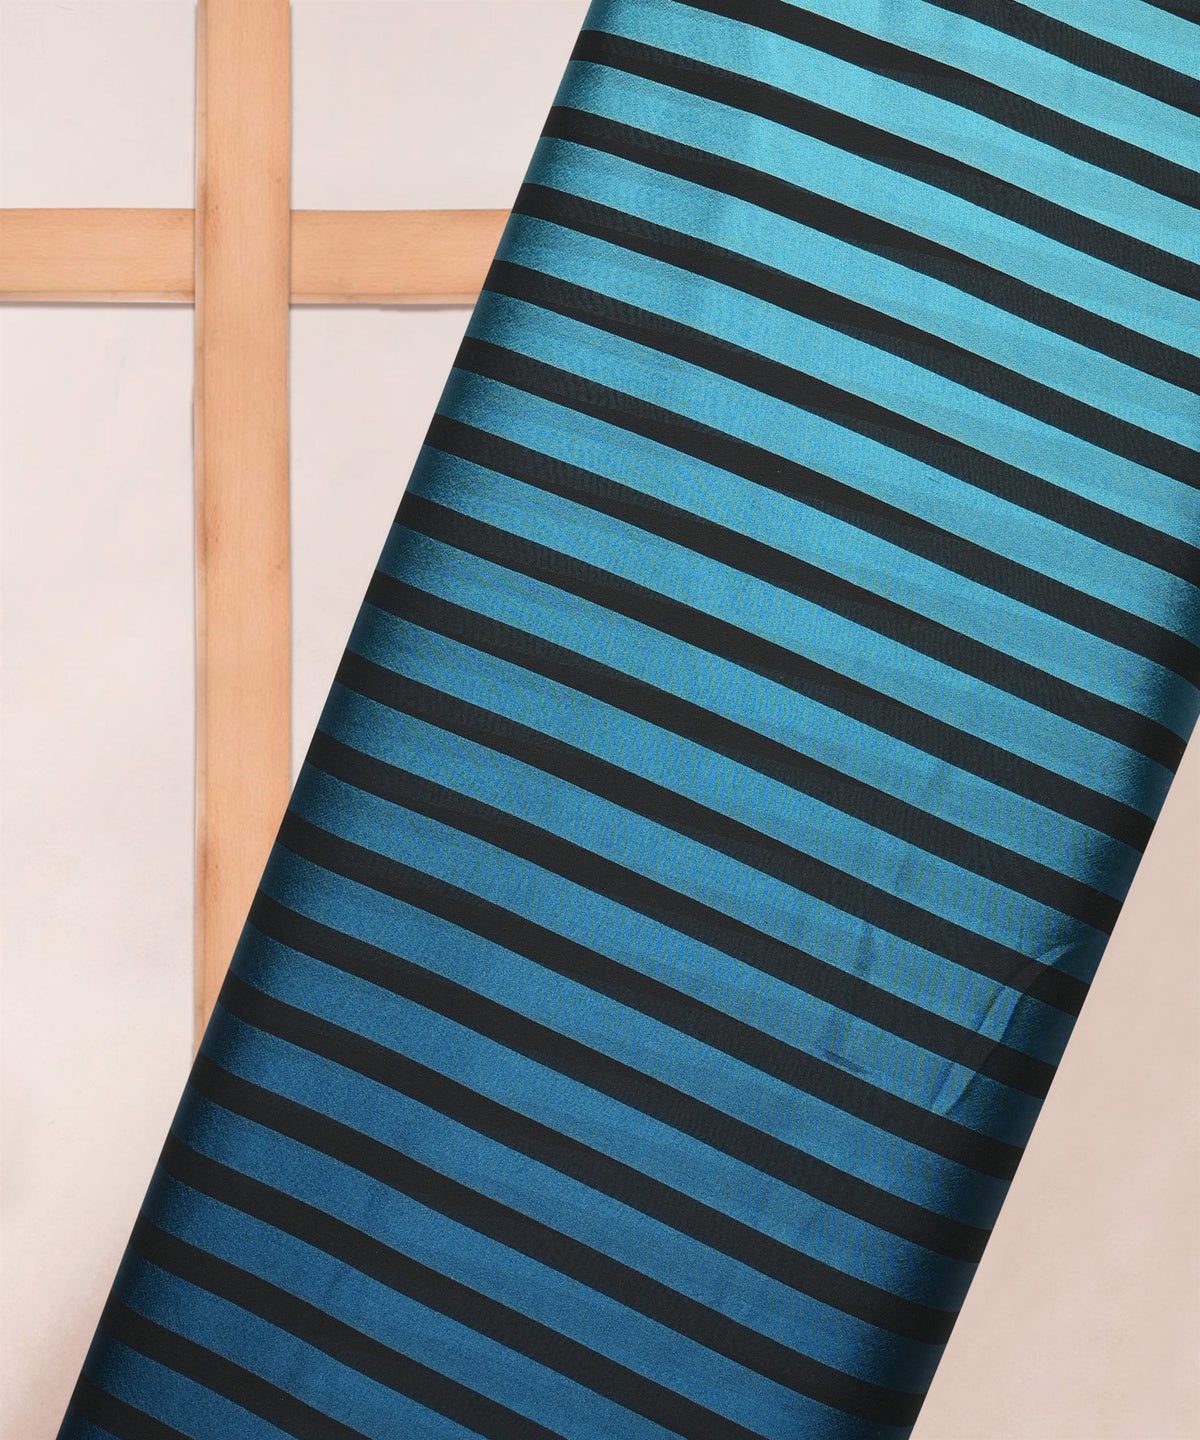 Royal Blue Shaded Chiffon Fabric with Stripes